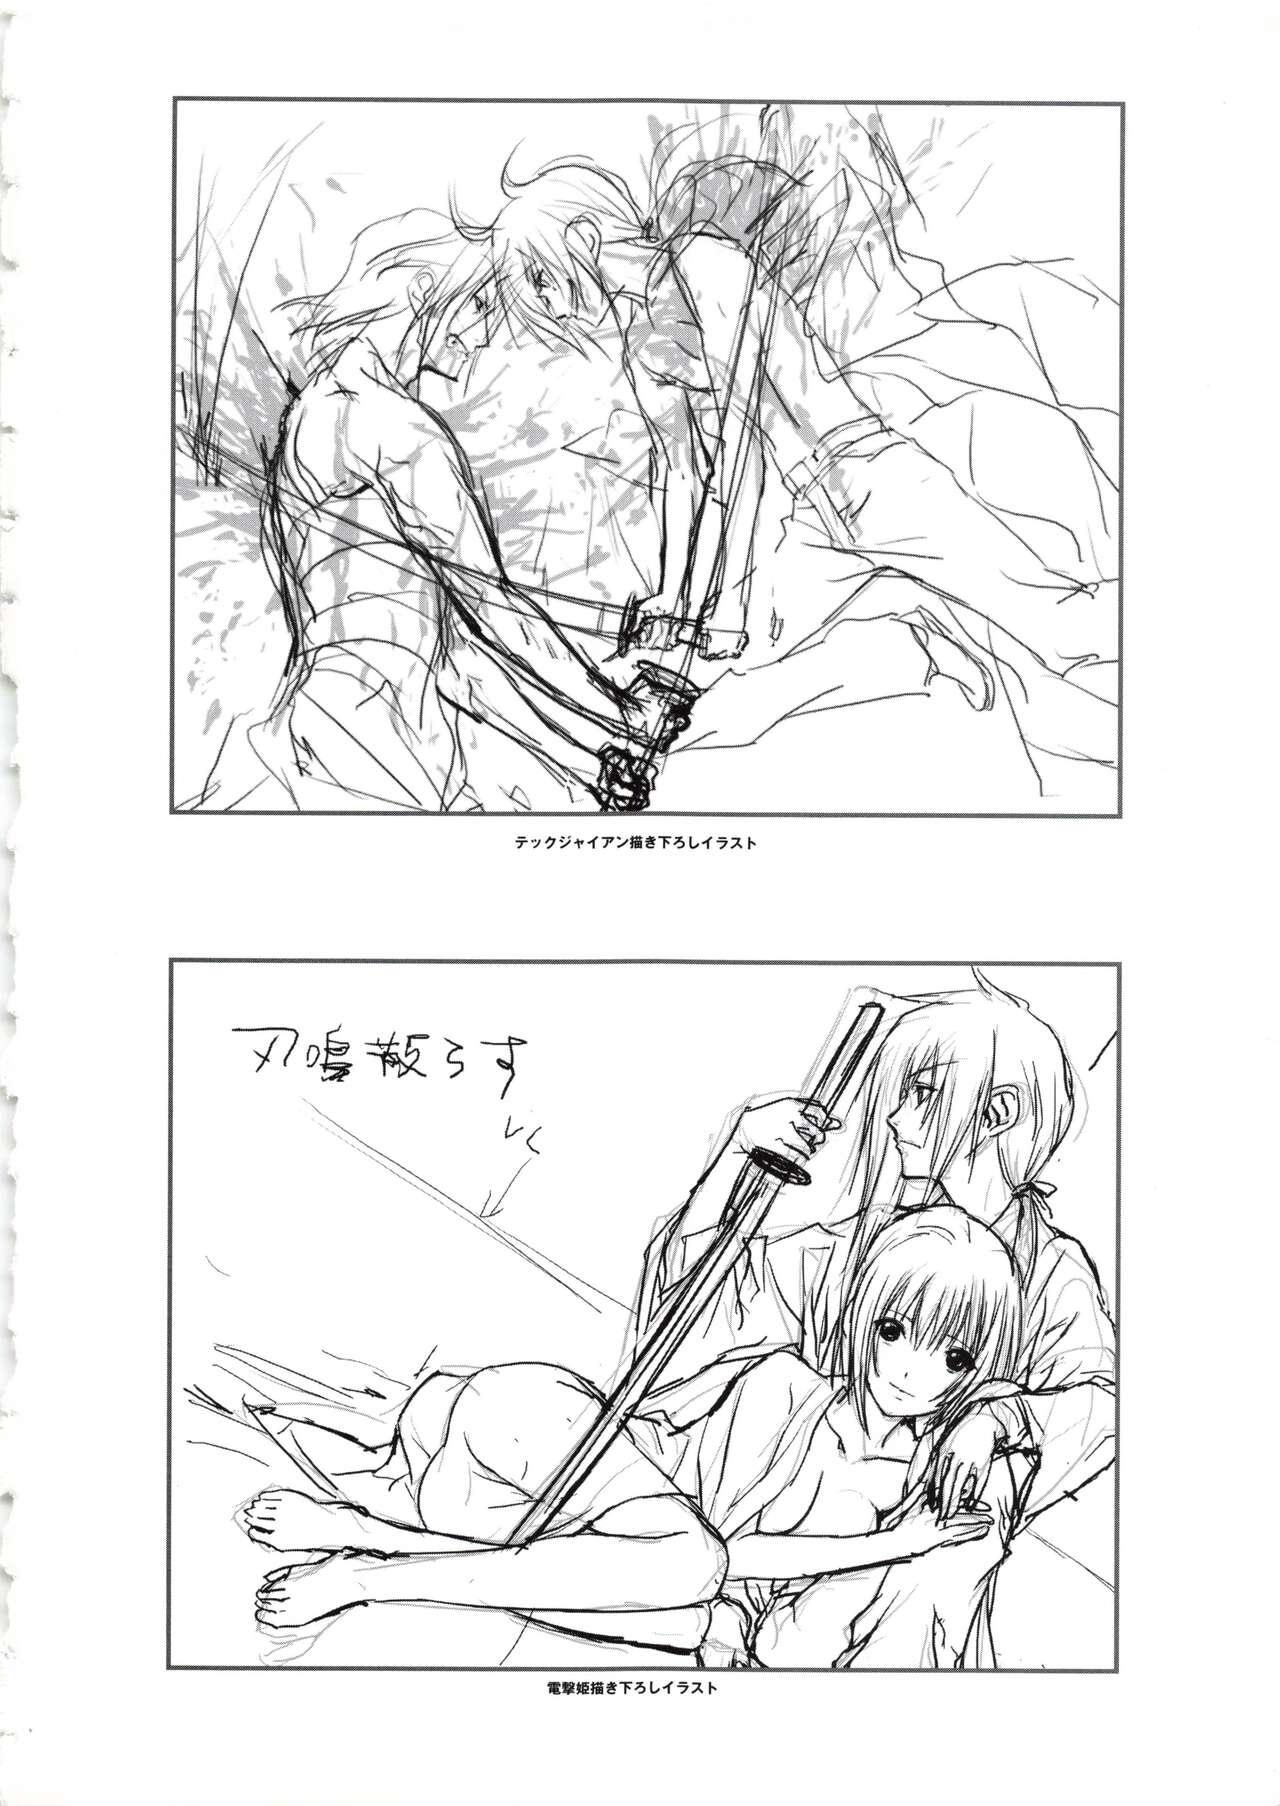 Hanachirasu - Initial Sketches and Unprocessed Illustrations - Selection 41